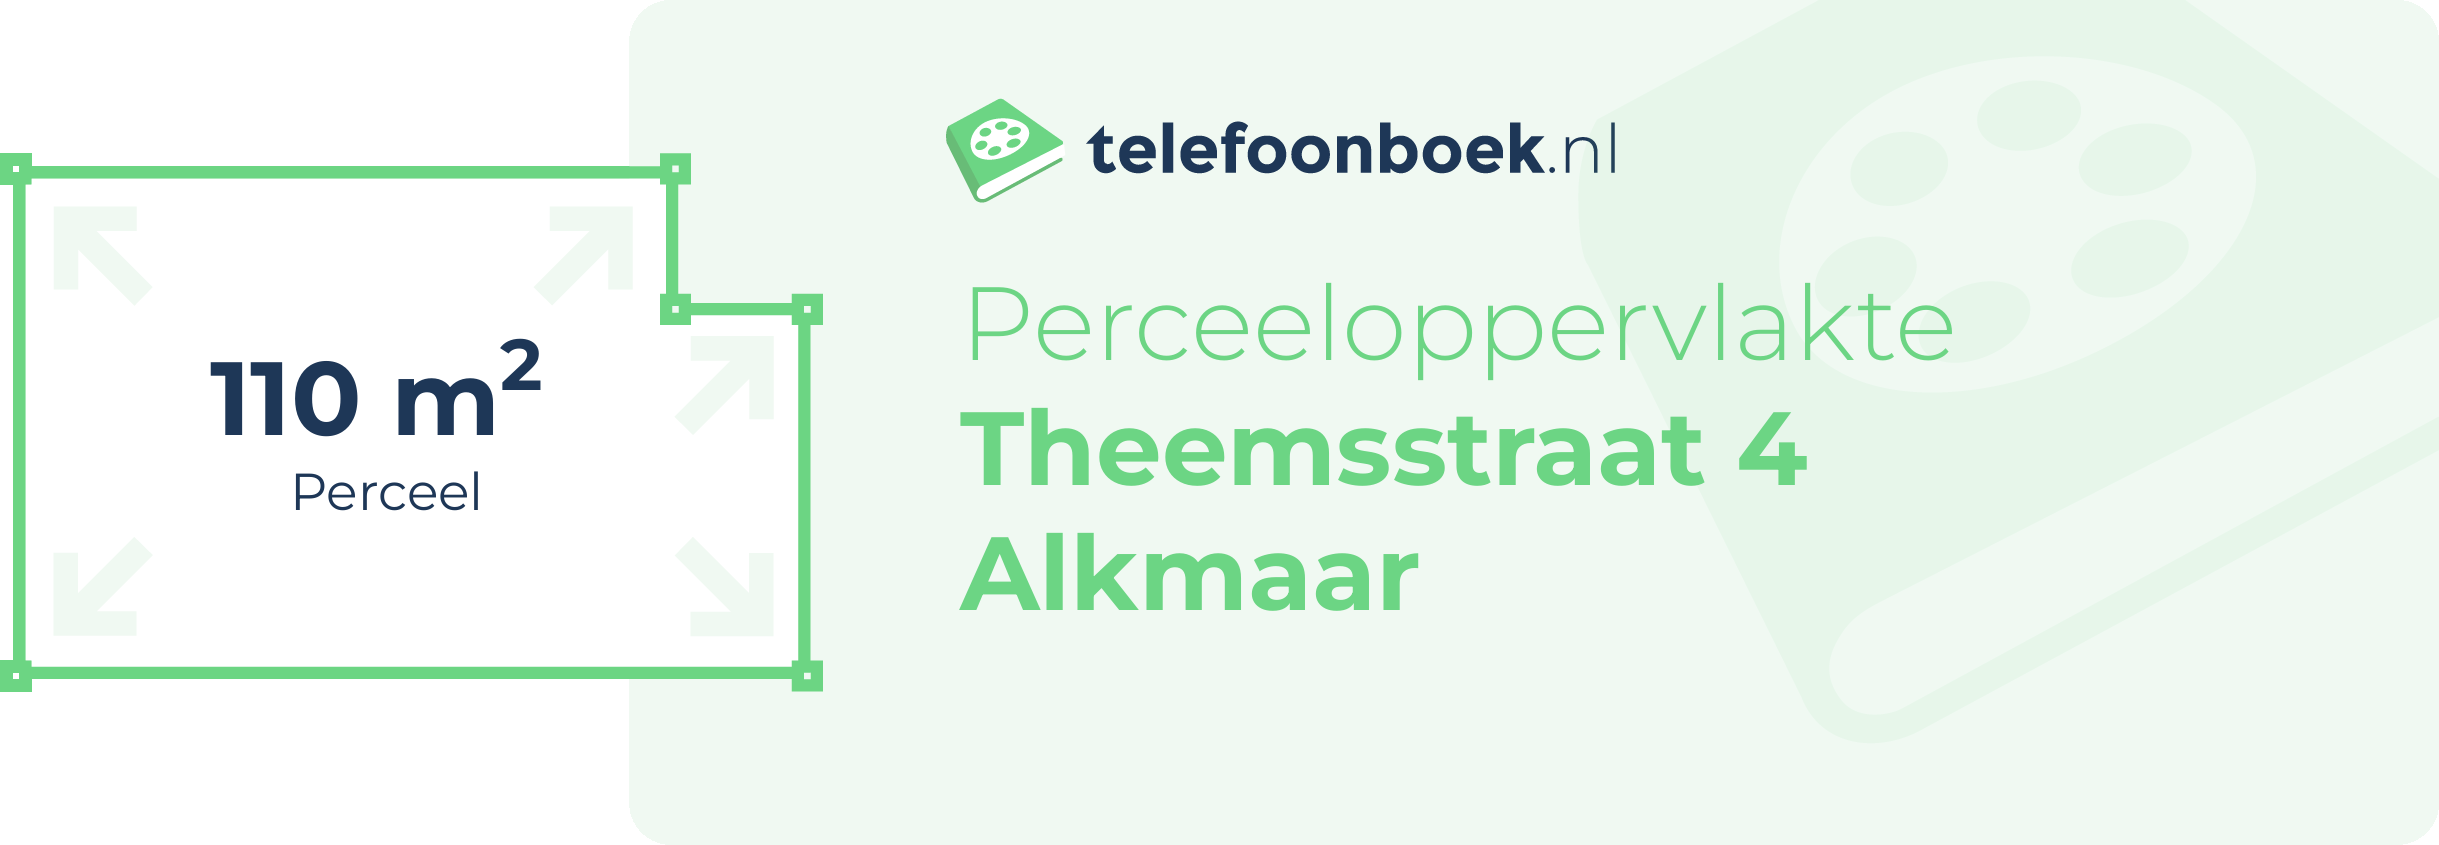 Perceeloppervlakte Theemsstraat 4 Alkmaar